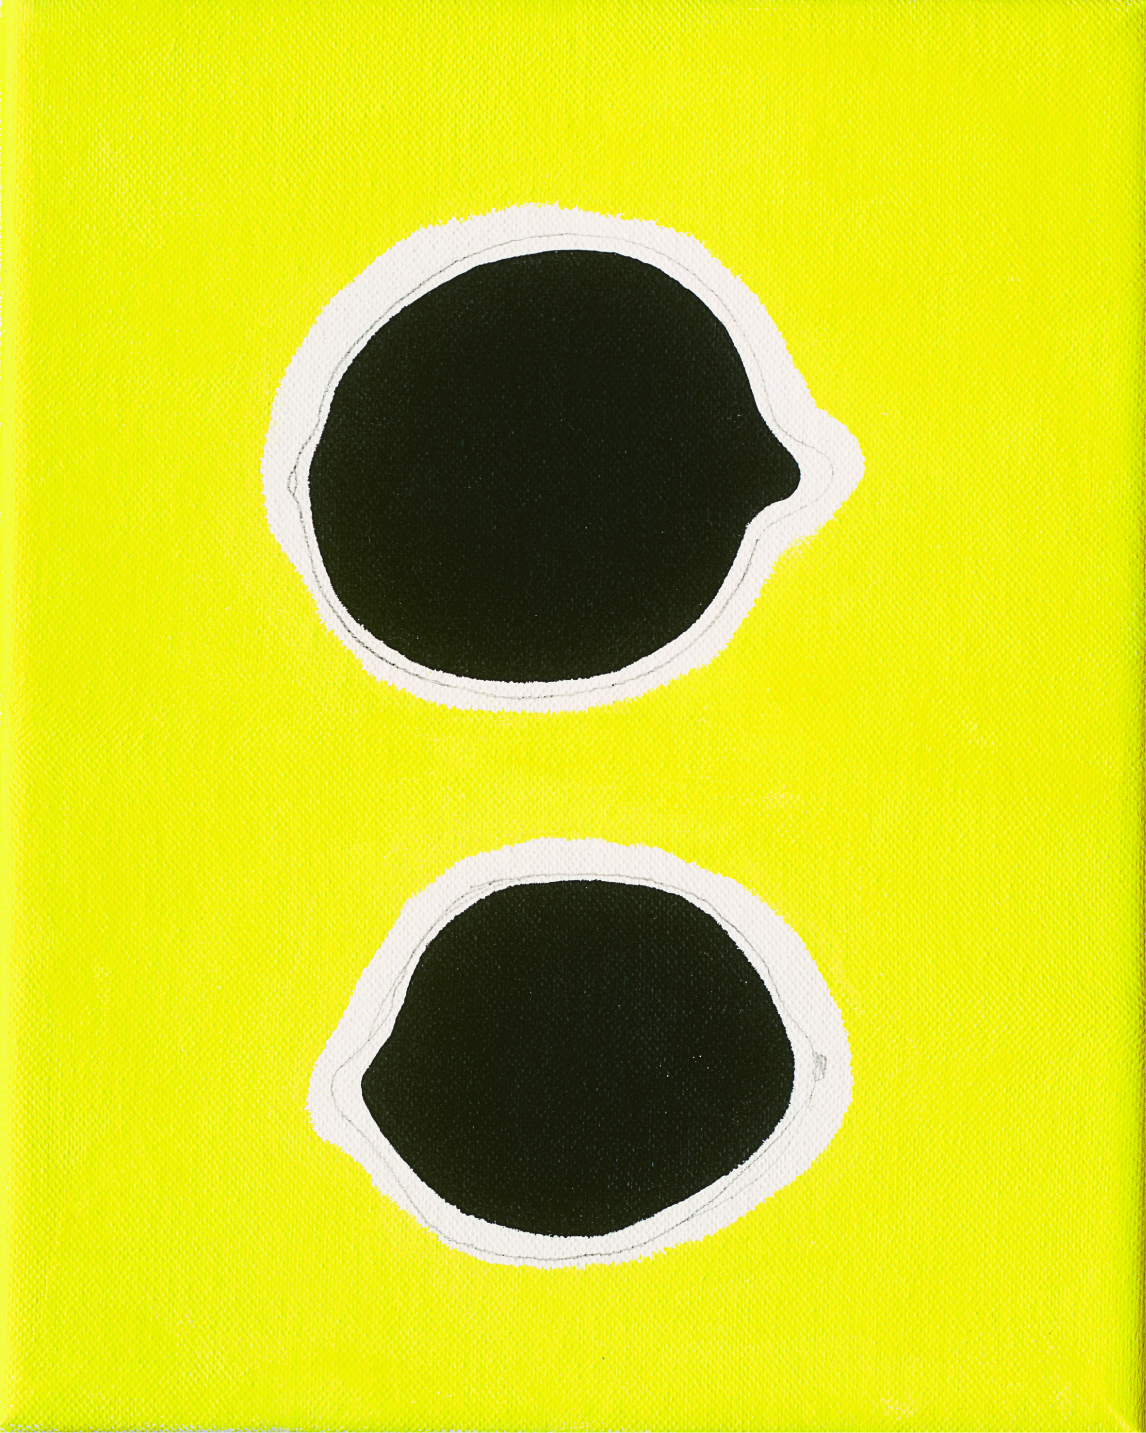 Two Lemons, 2016, pencil, acrylic on canvas, 20 x 25 cm